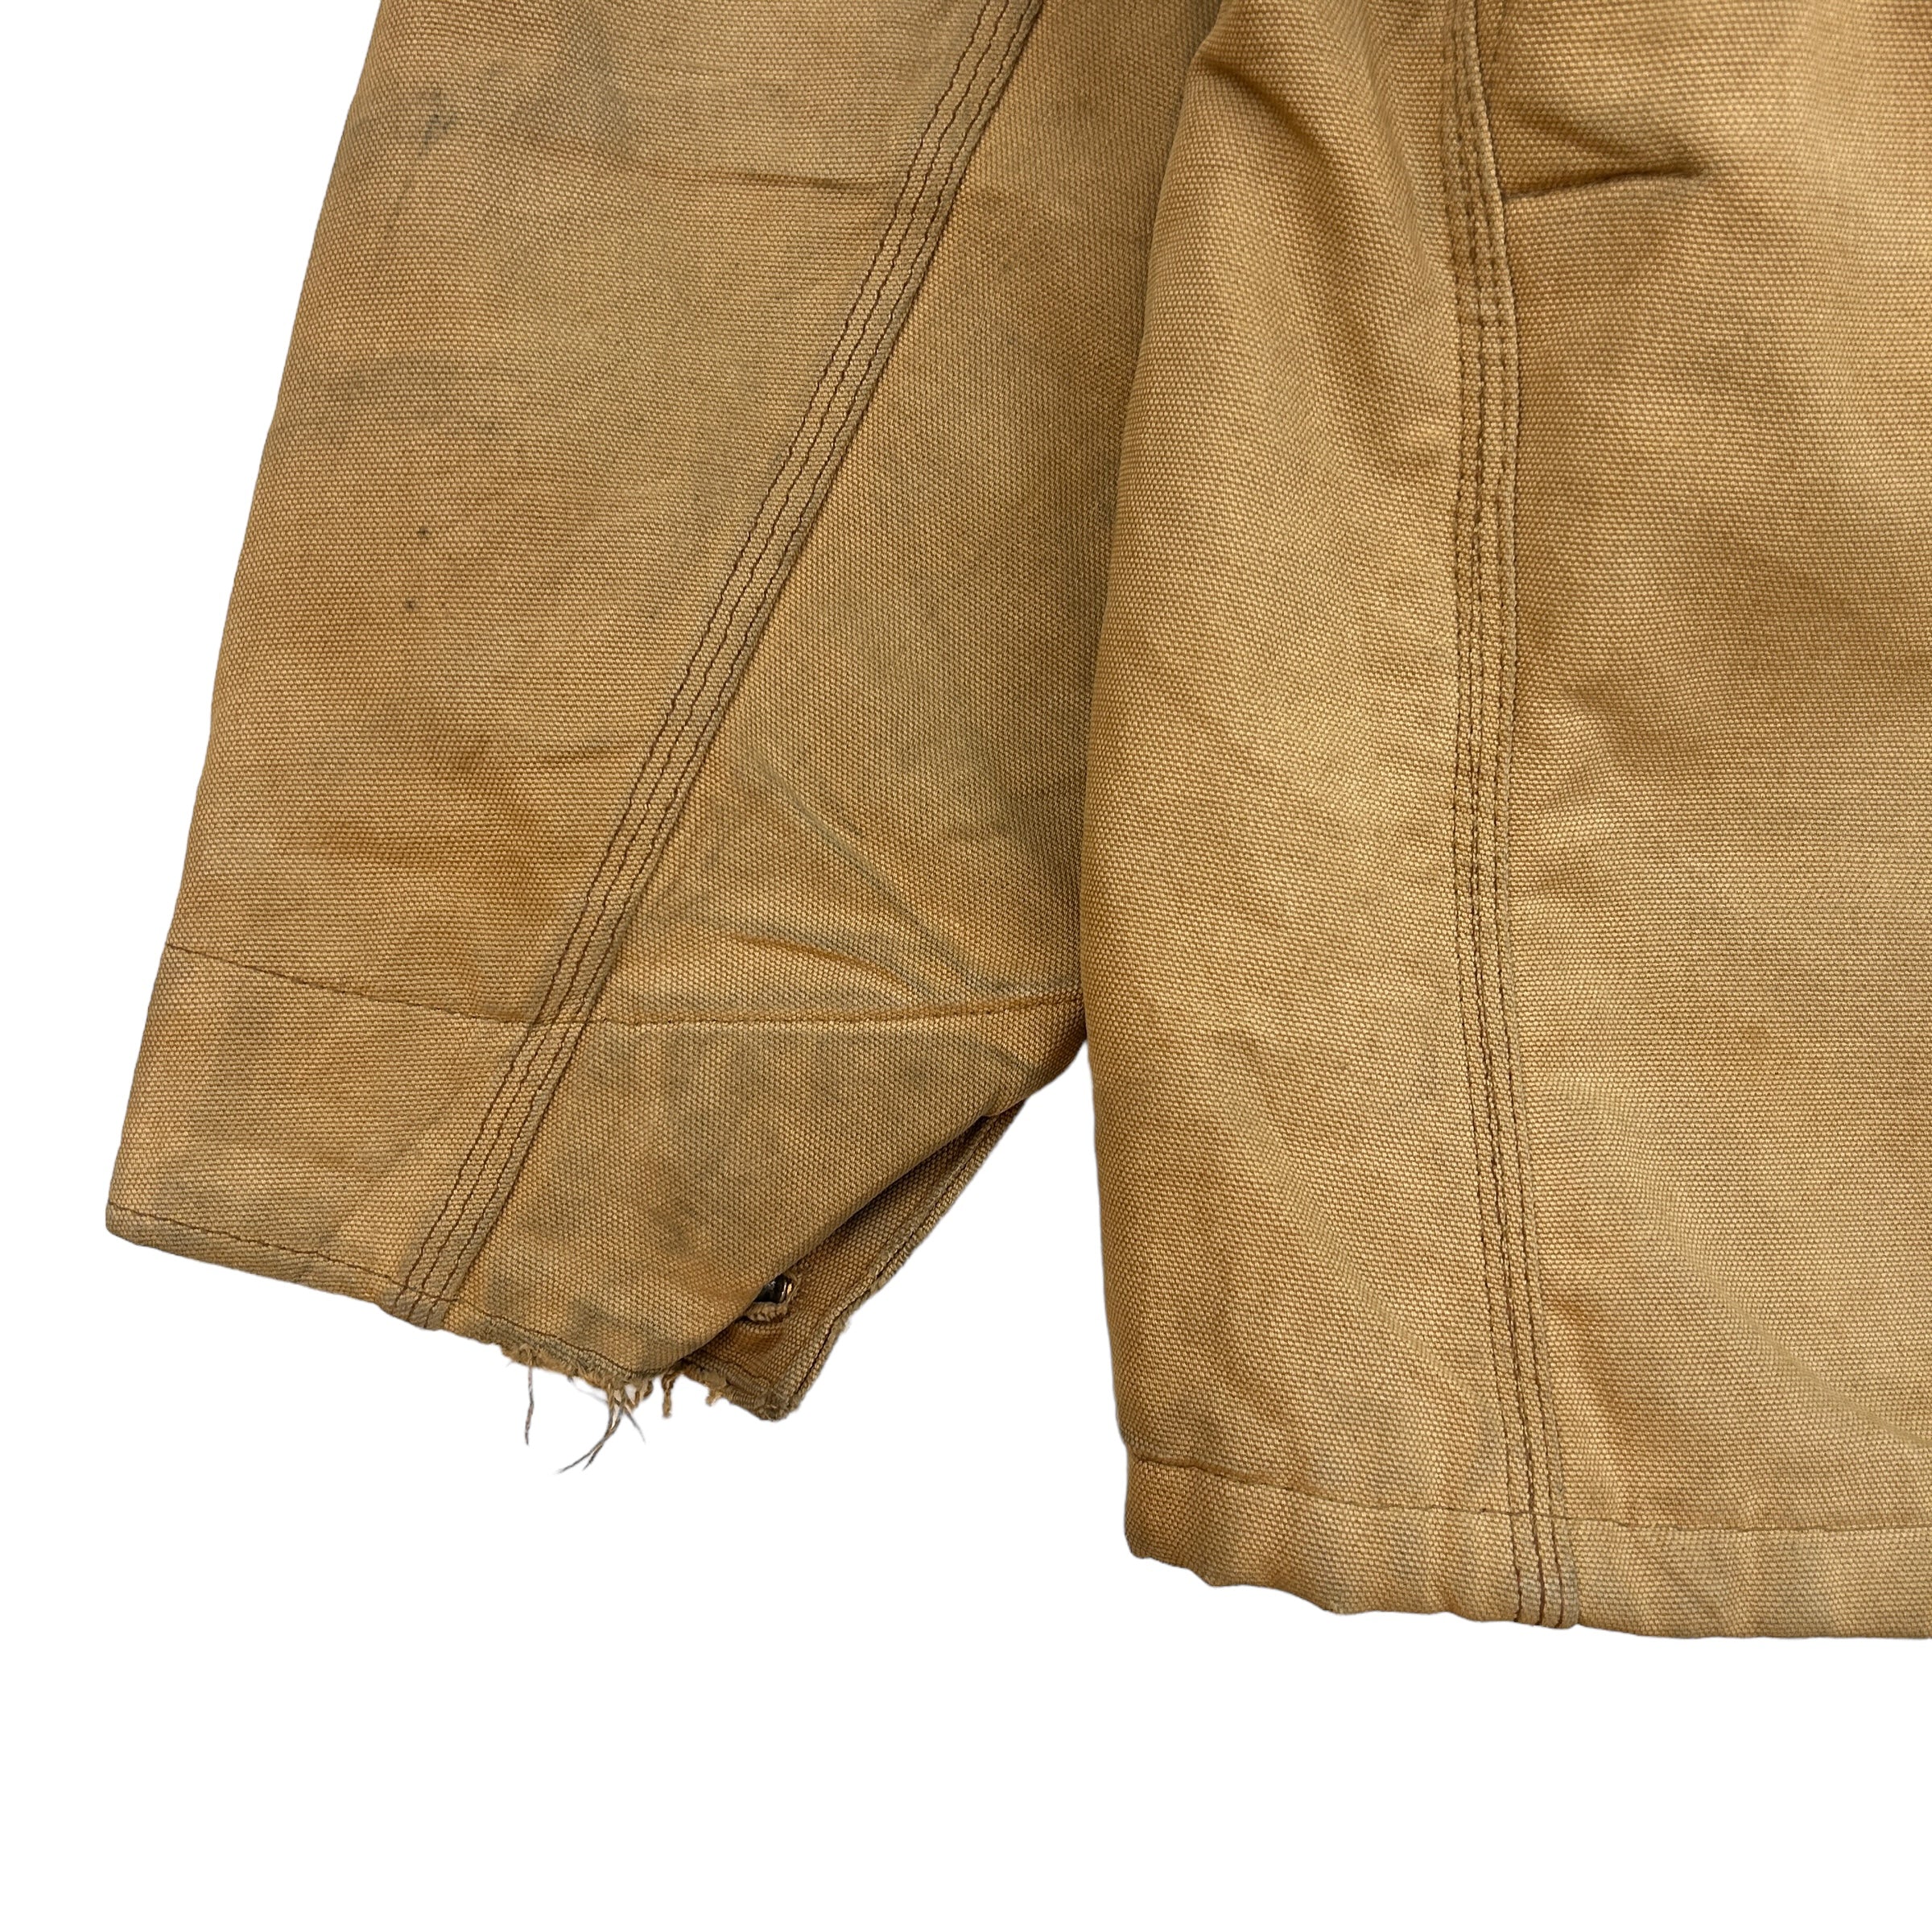 Vintage Carhartt Work Jacket Dark Tan